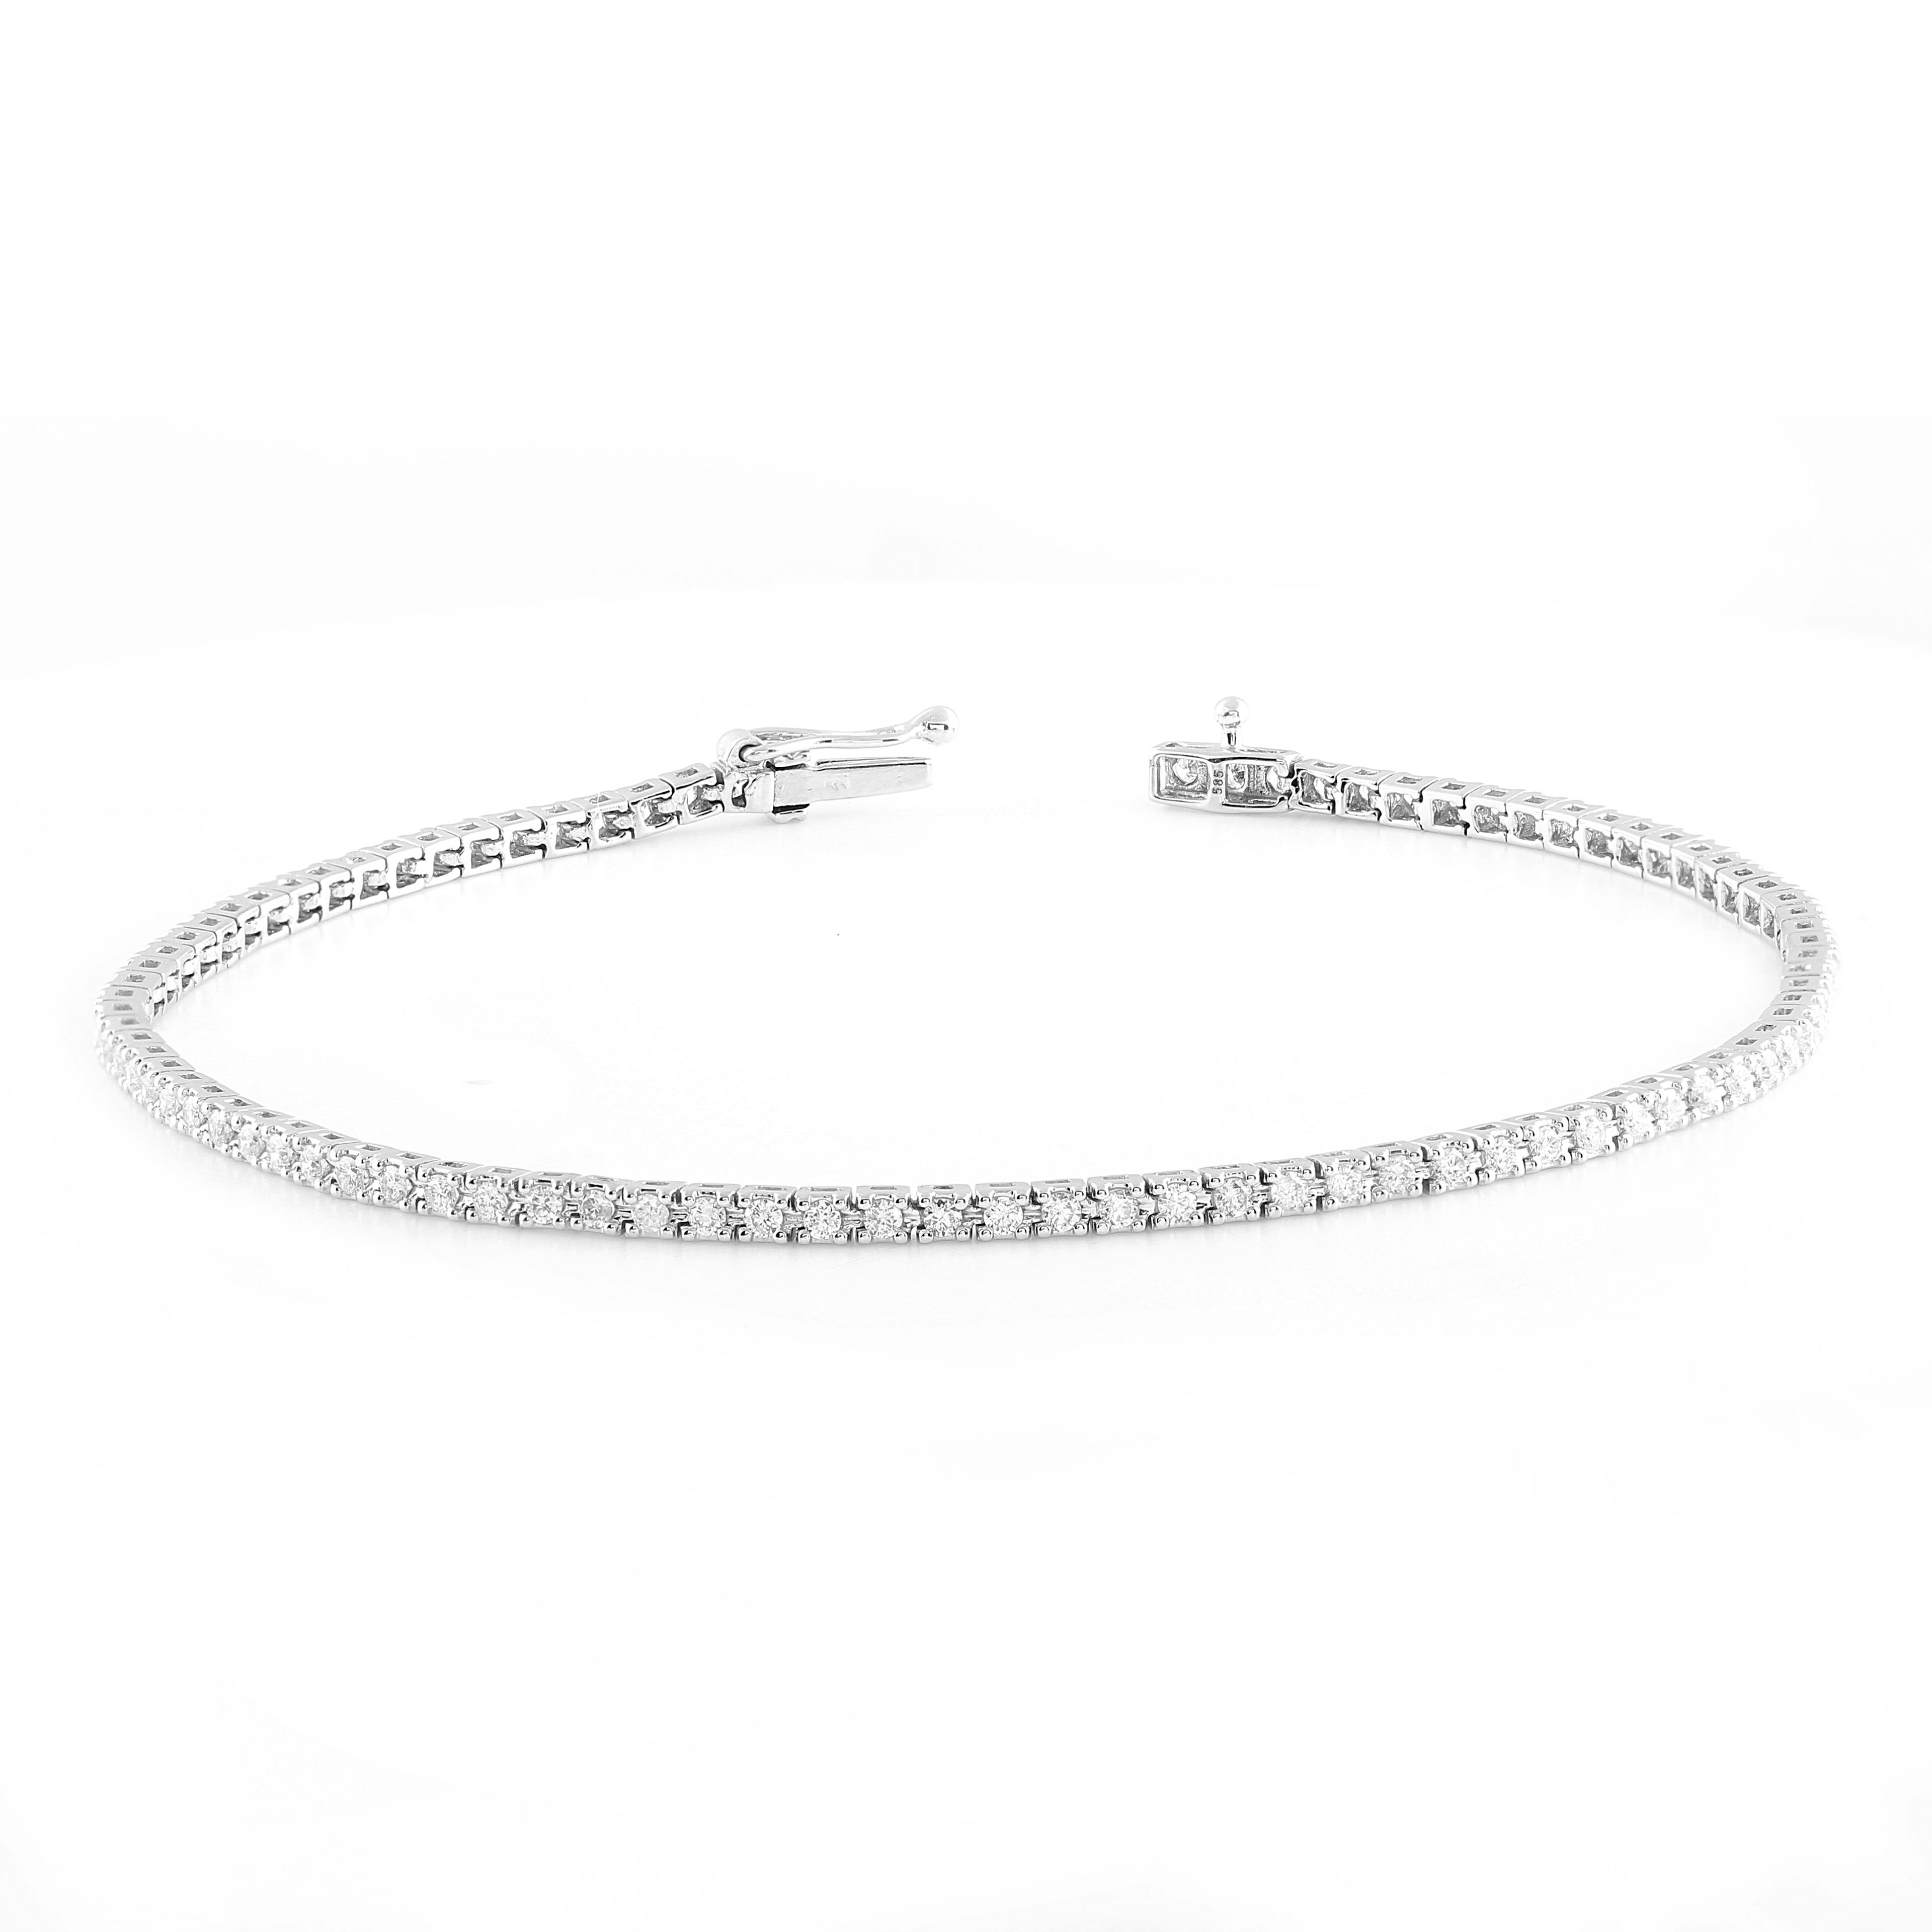 1.0ct Tennis bracelet - Claw set, 7” length